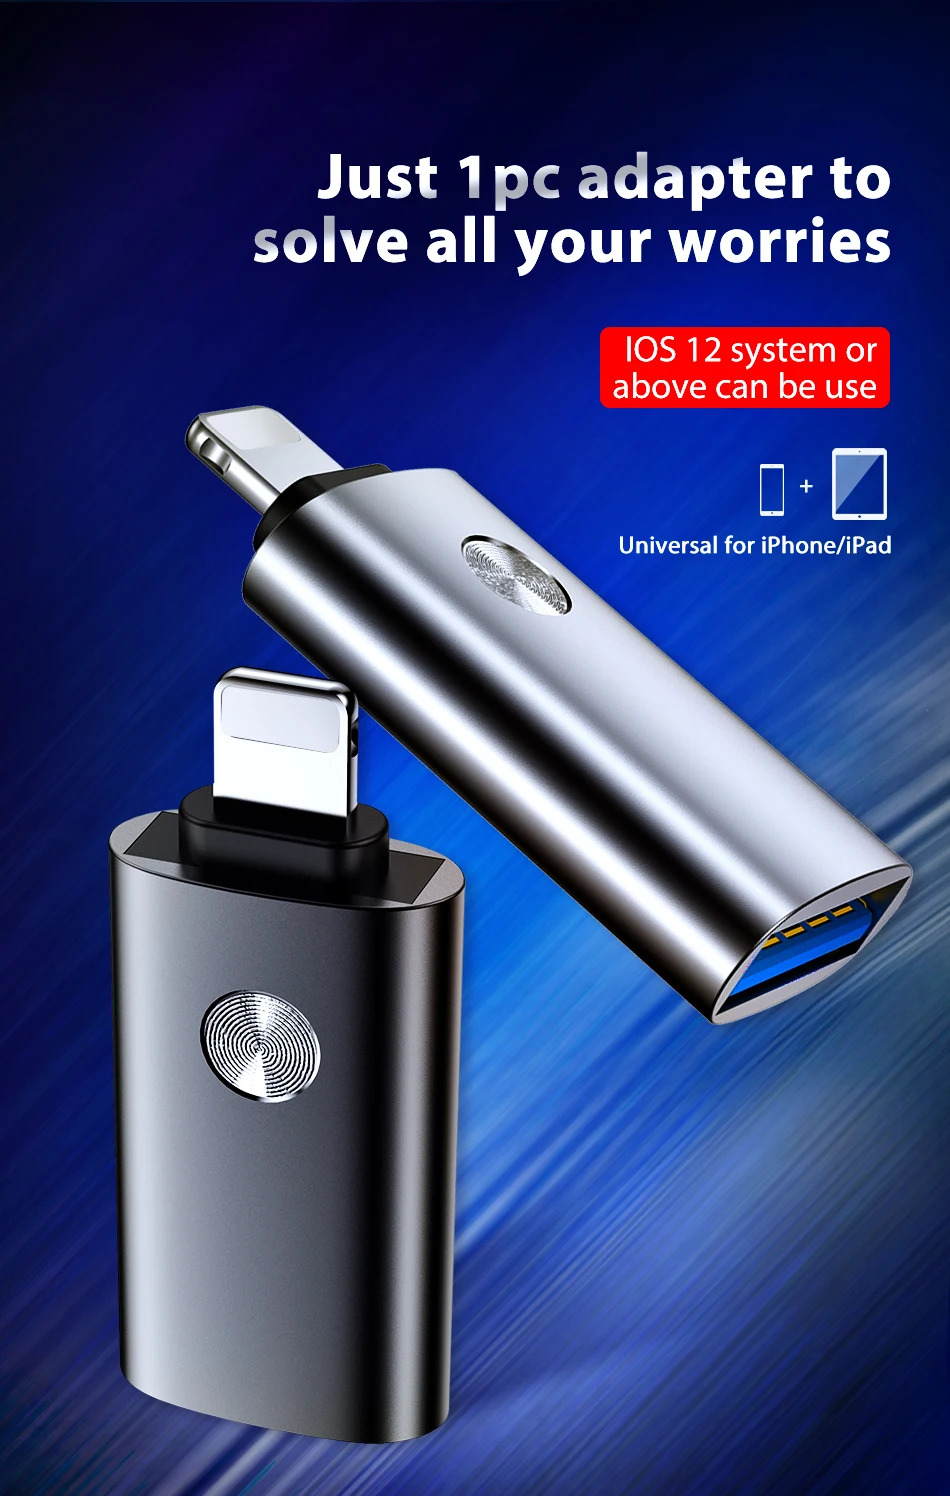 ACCEZZ USB OTG адаптер для iPhone 11 Pro Max X XR XS 8 Plus планшет камера ноутбук разъем для клавиатуры Освещение USB 3,0 адаптер